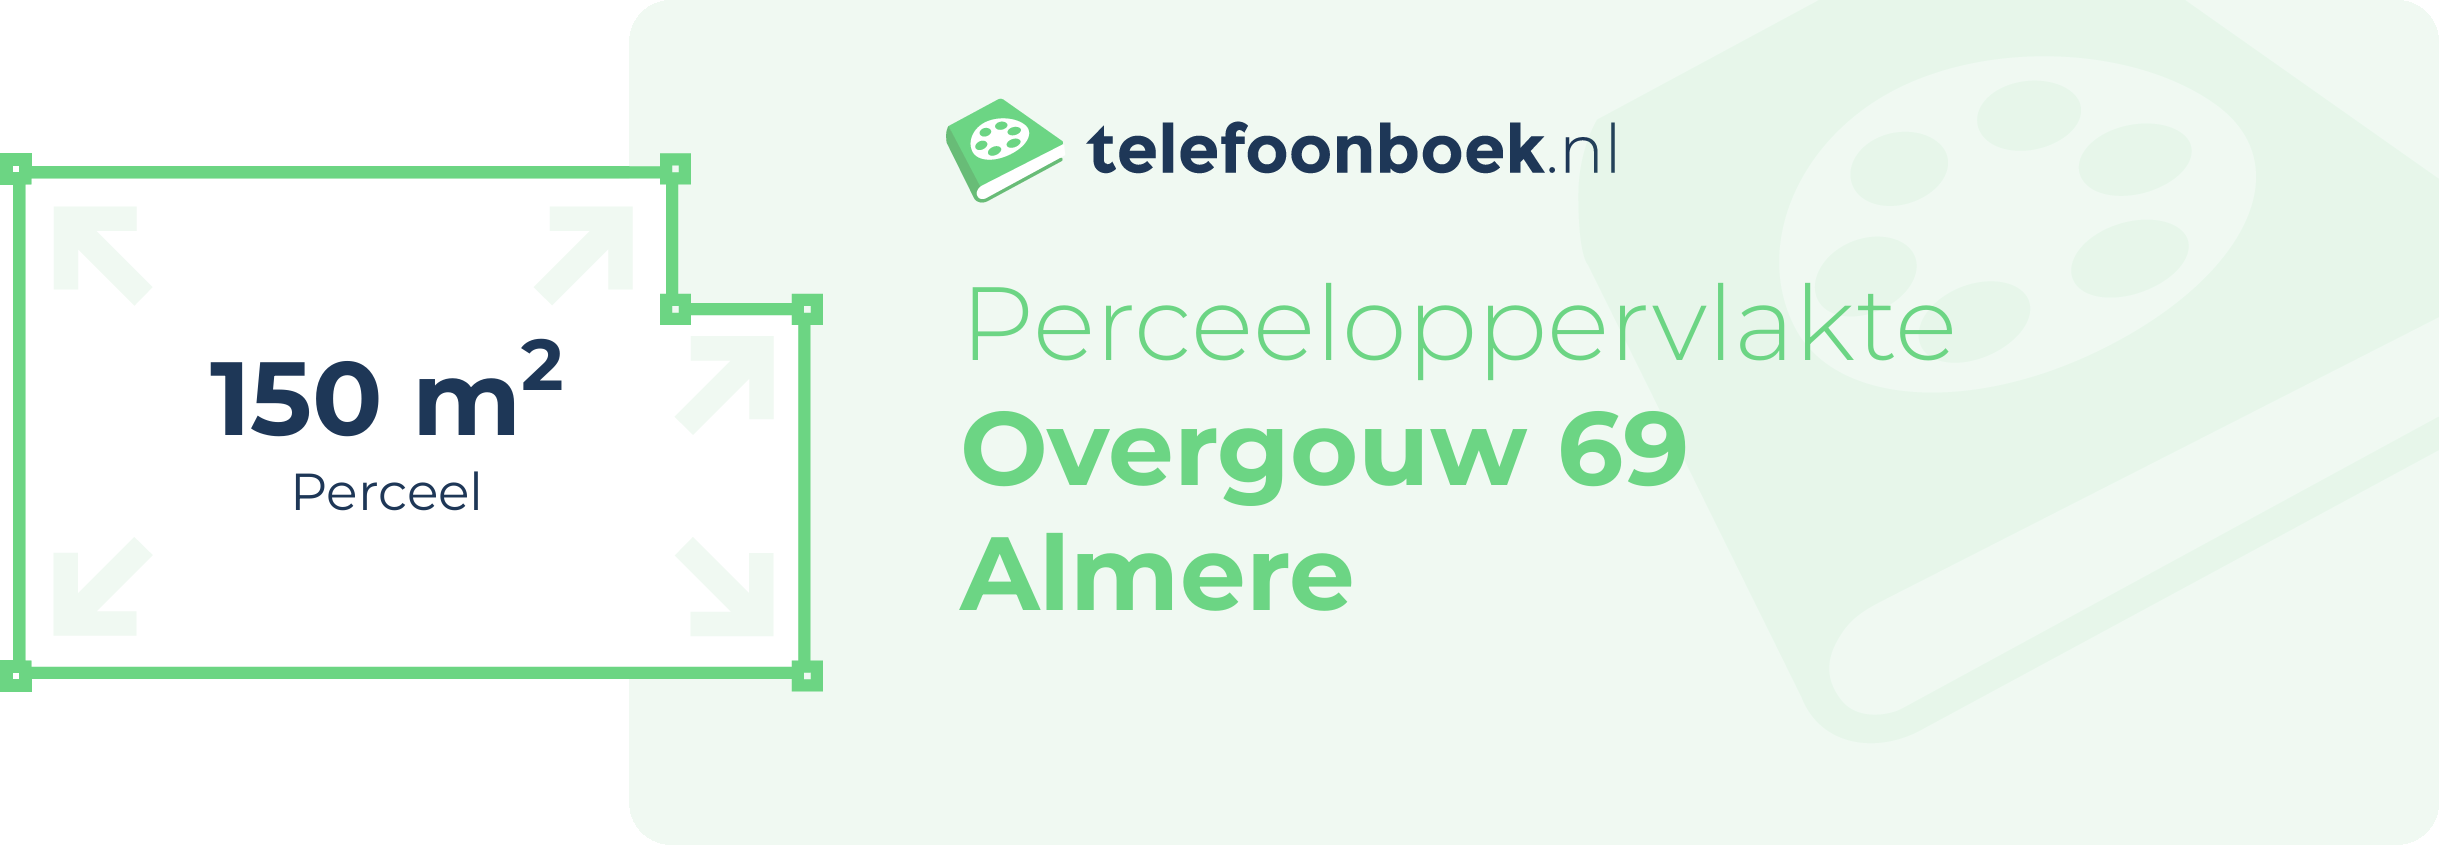 Perceeloppervlakte Overgouw 69 Almere